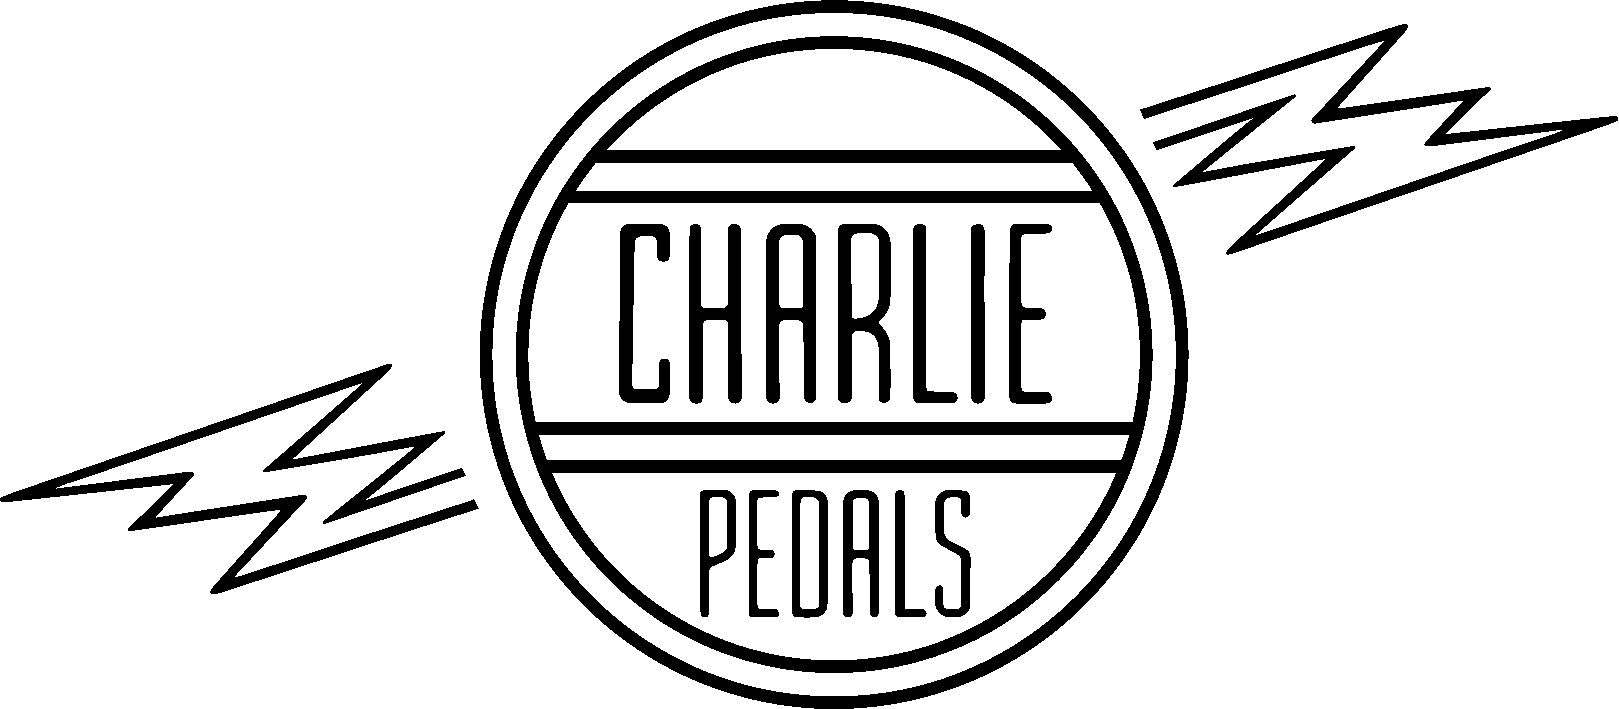 Charlie pedals logo